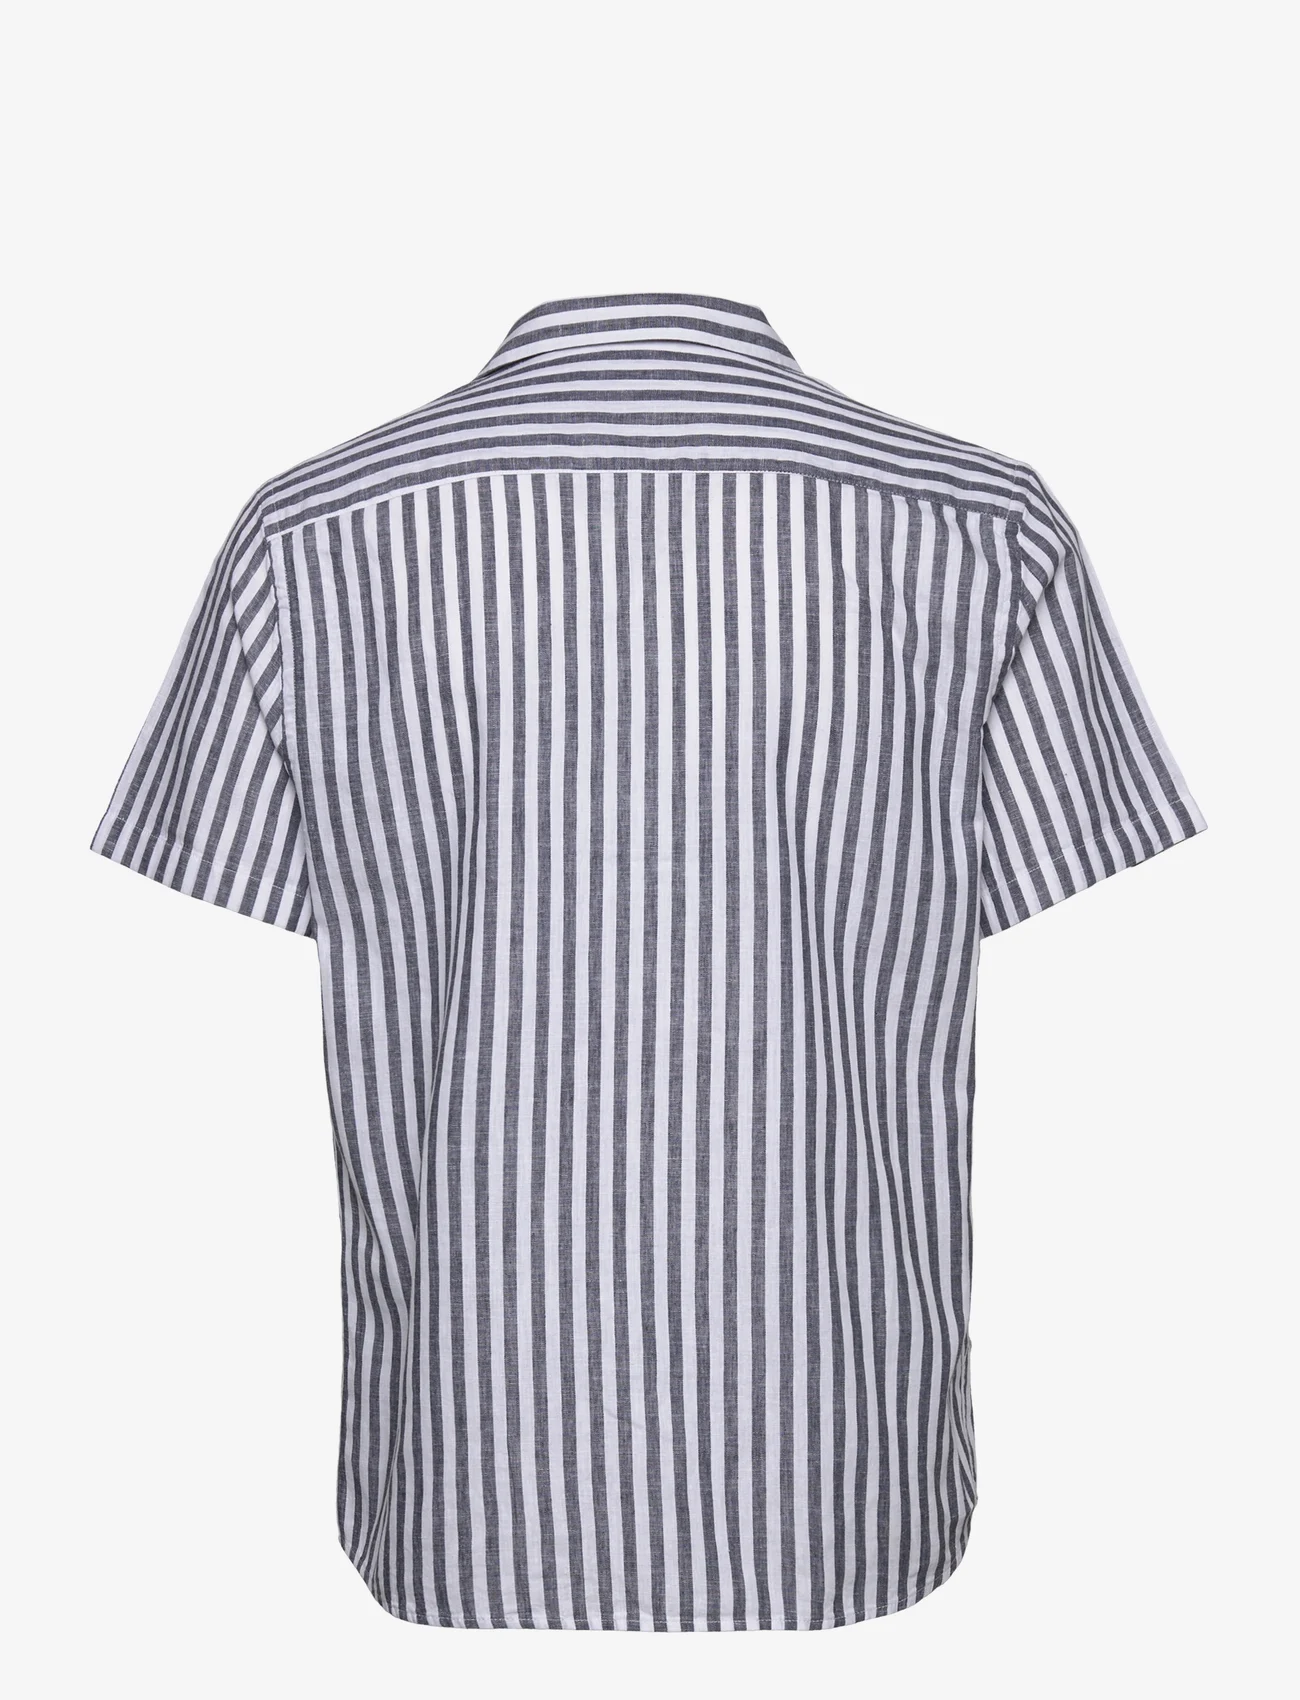 Clean Cut Copenhagen - Giles Bowling Striped Shirt S/S - short-sleeved shirts - navy / ecru - 1